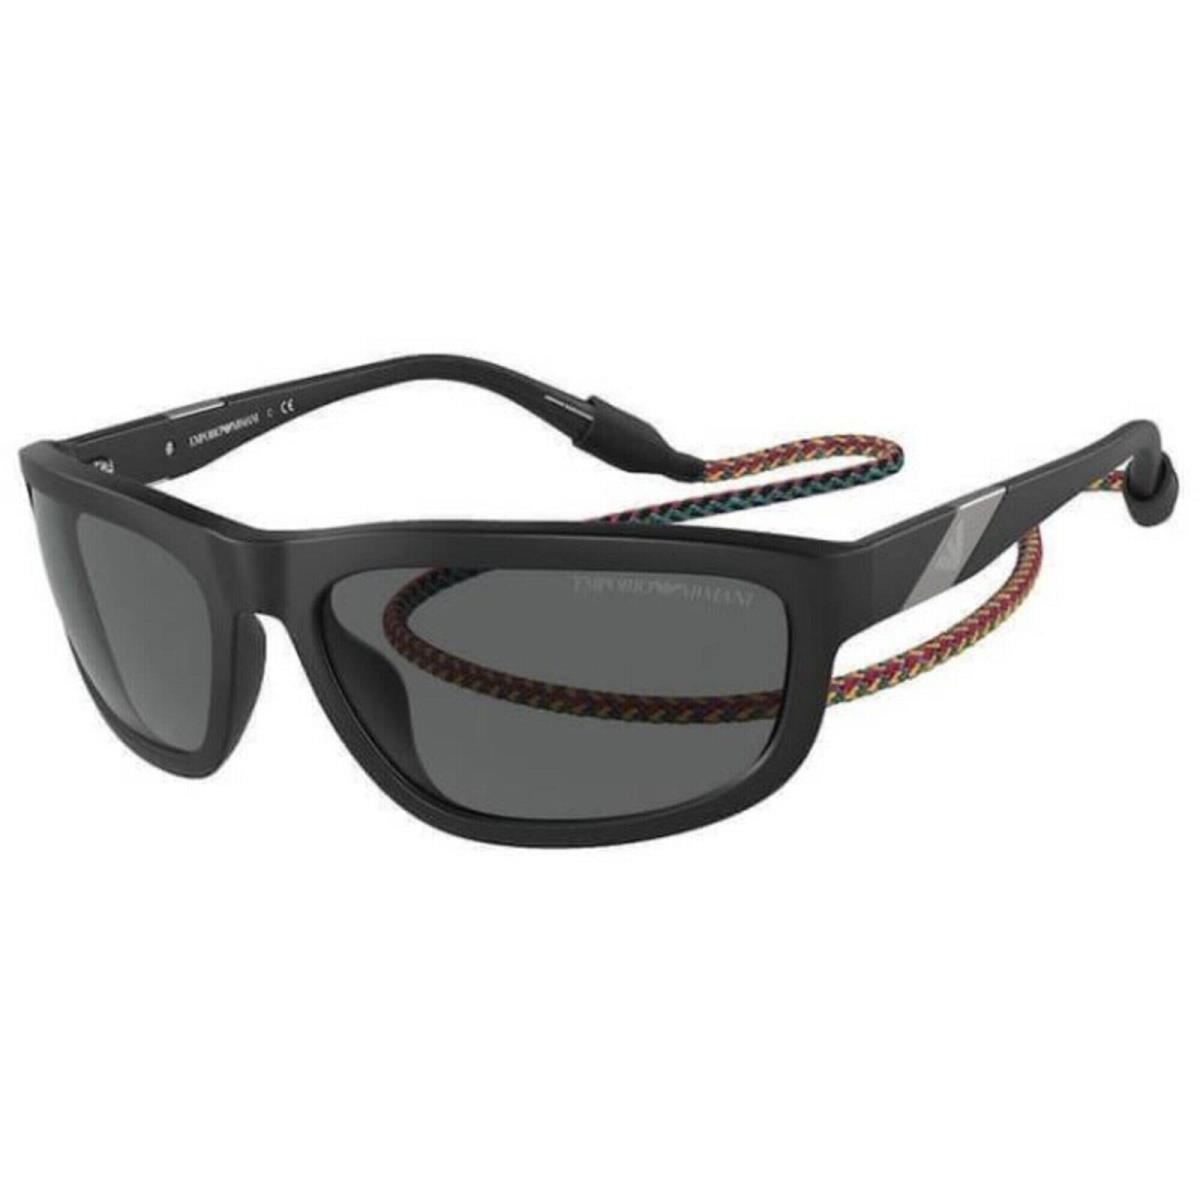 Emporio Armani Men`s Sunglasses Black Plastic Wrap Frame Grey Lens 4183U 500187